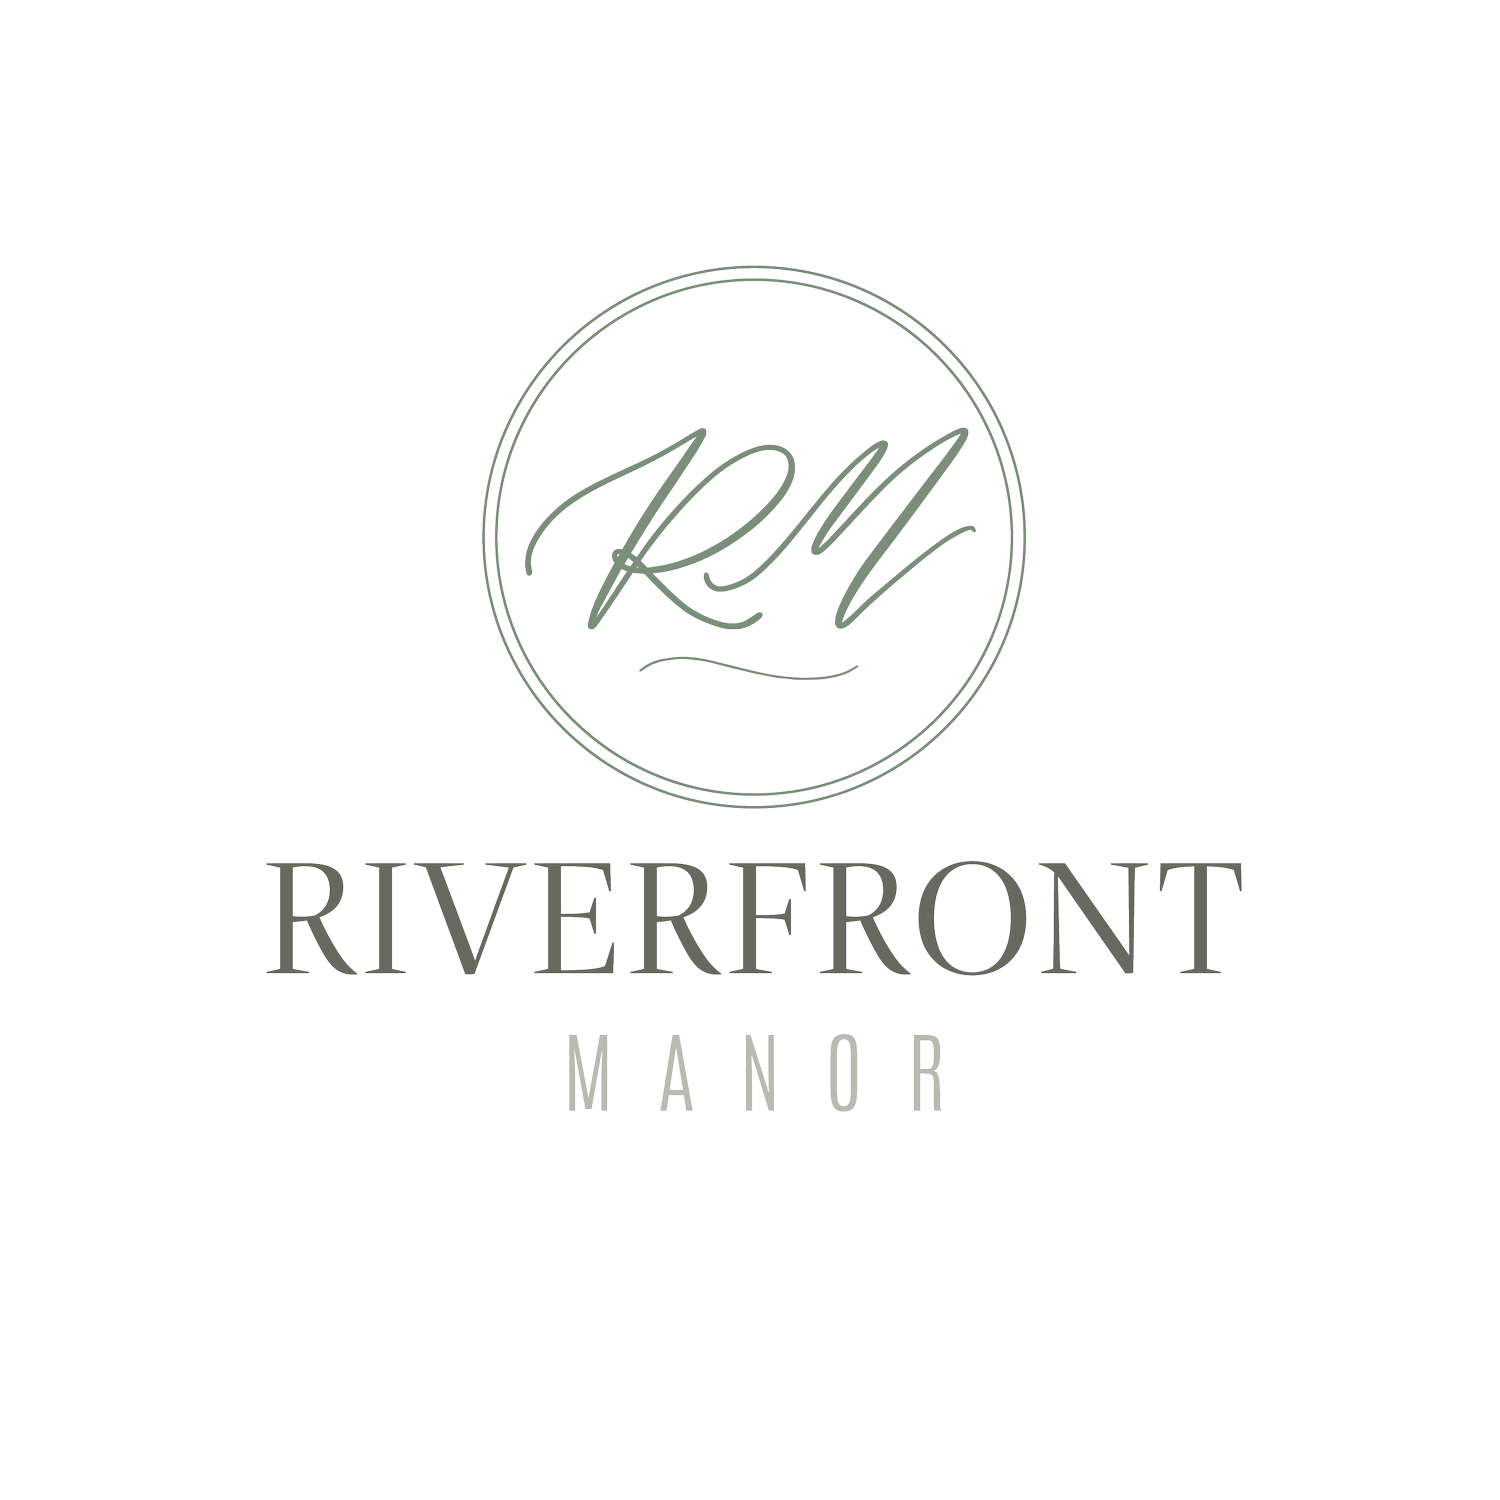 Riverfront Manor